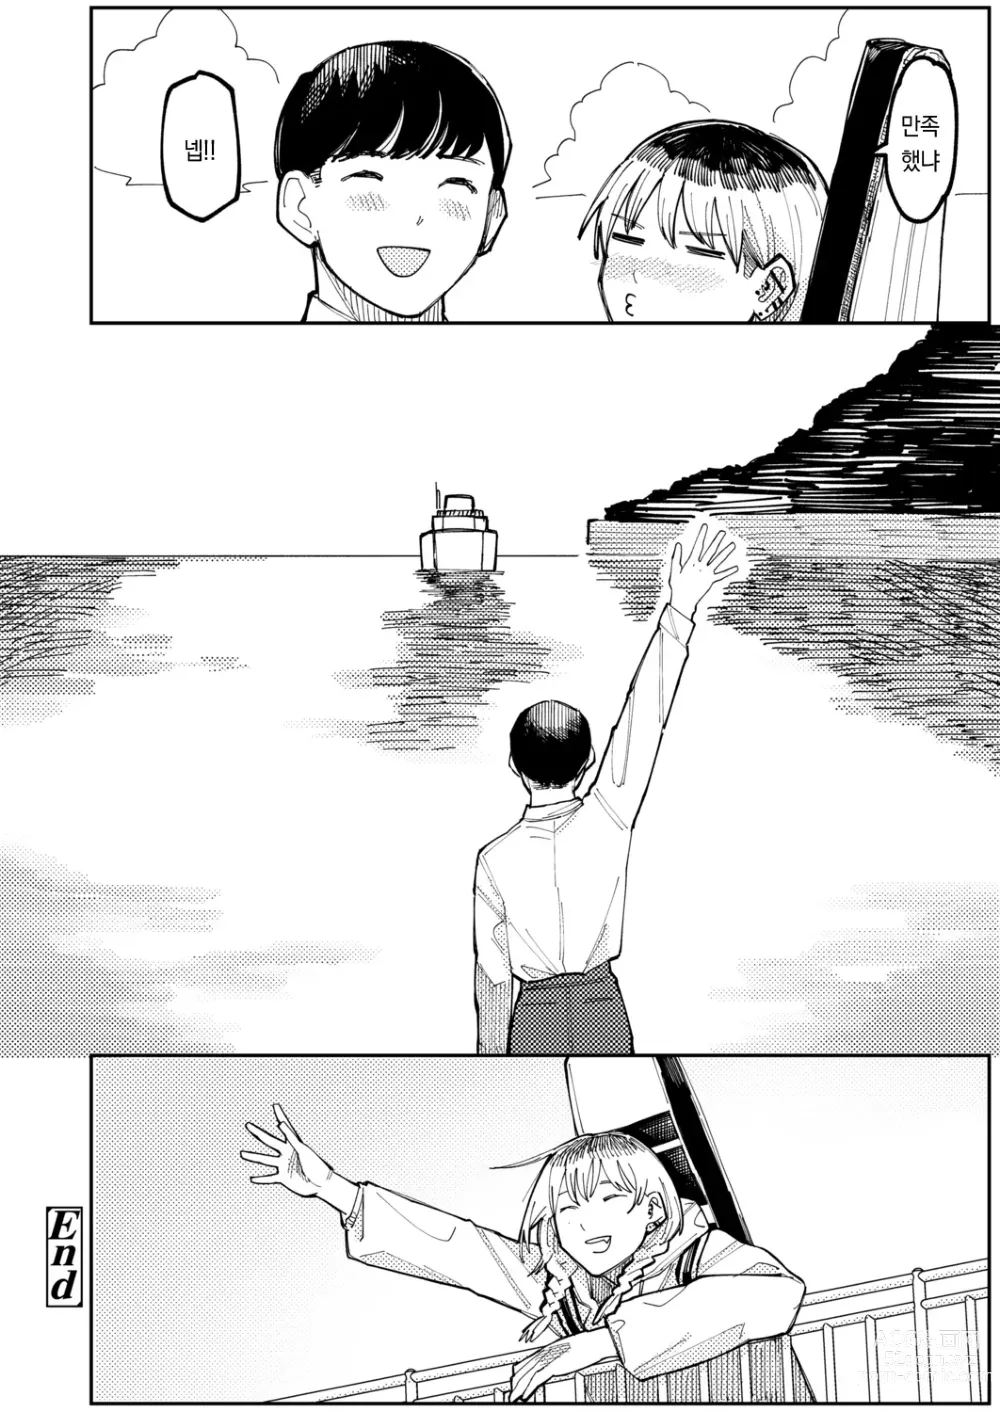 Page 49 of manga NEVER TOO LATE